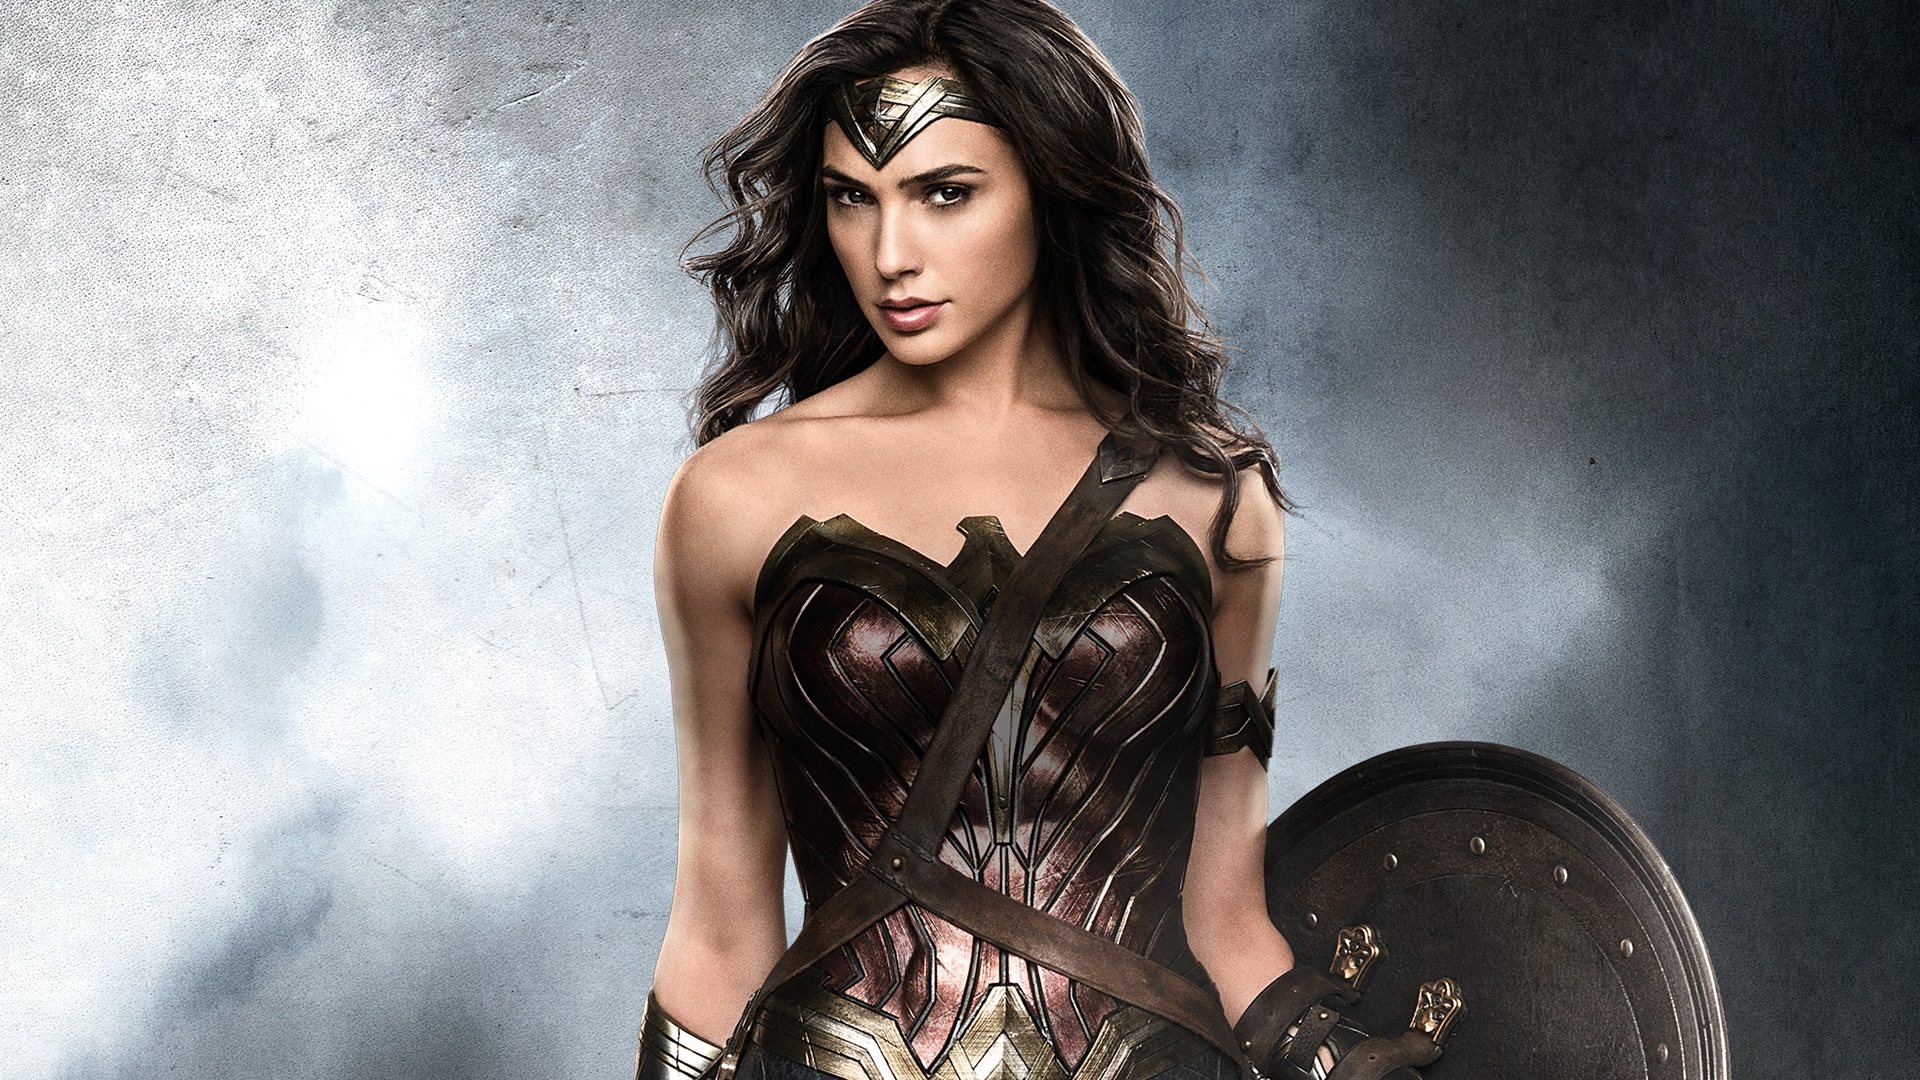 The Wonder Woman played by Gal Gadot [Photo: huanqiu.com]